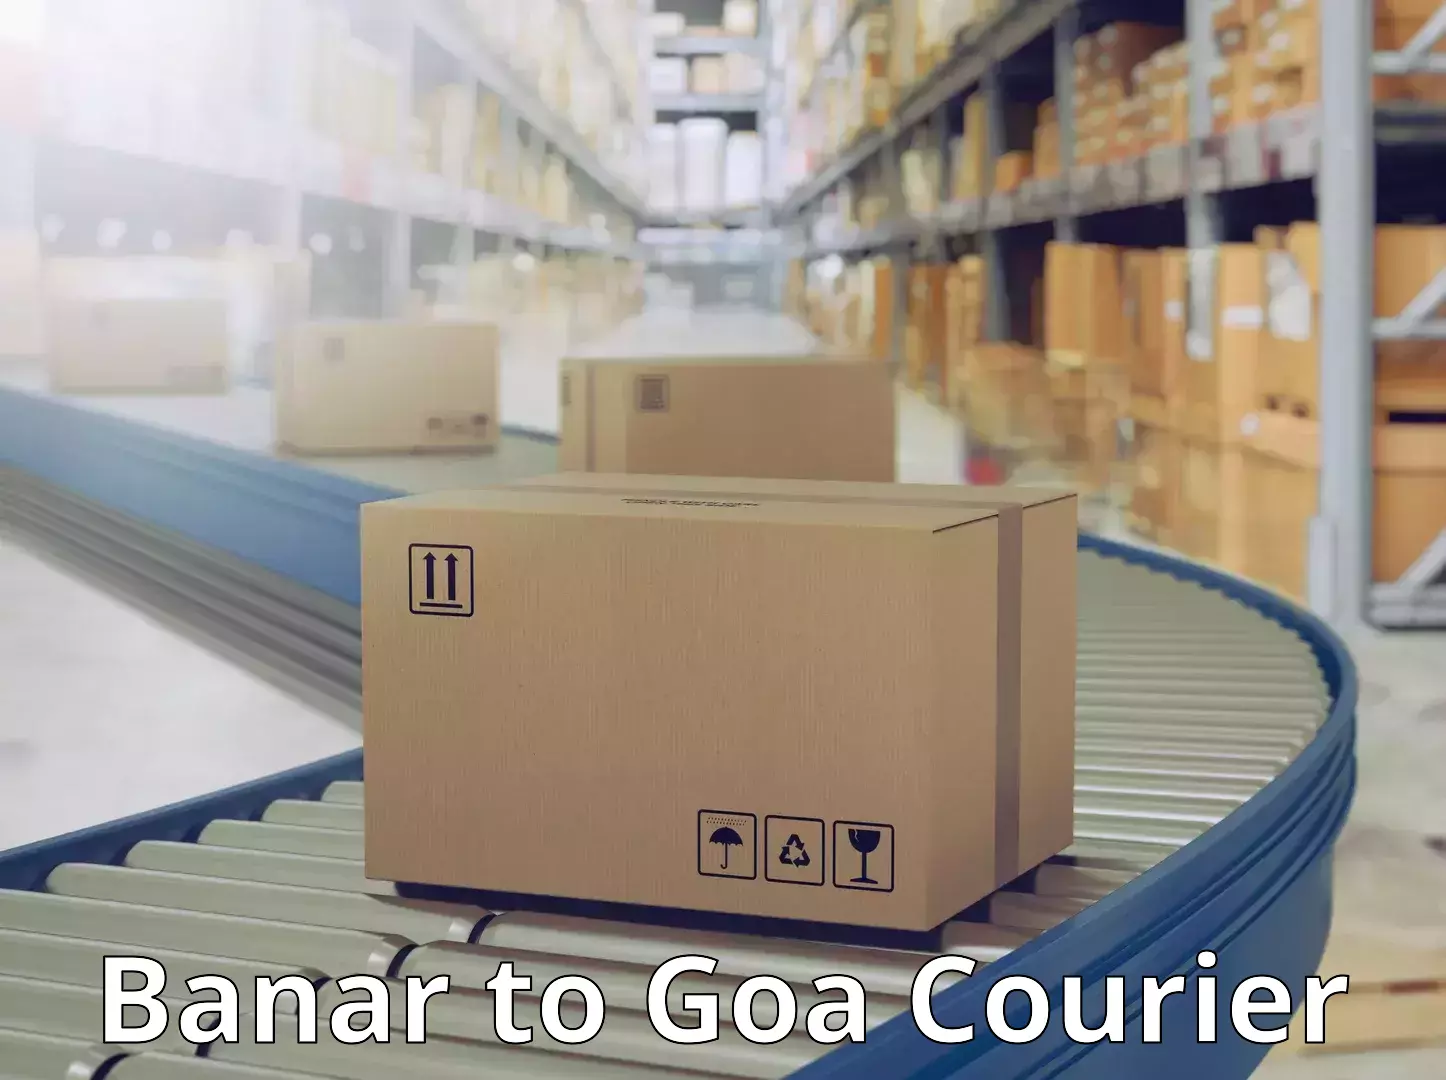 24/7 courier service in Banar to Goa